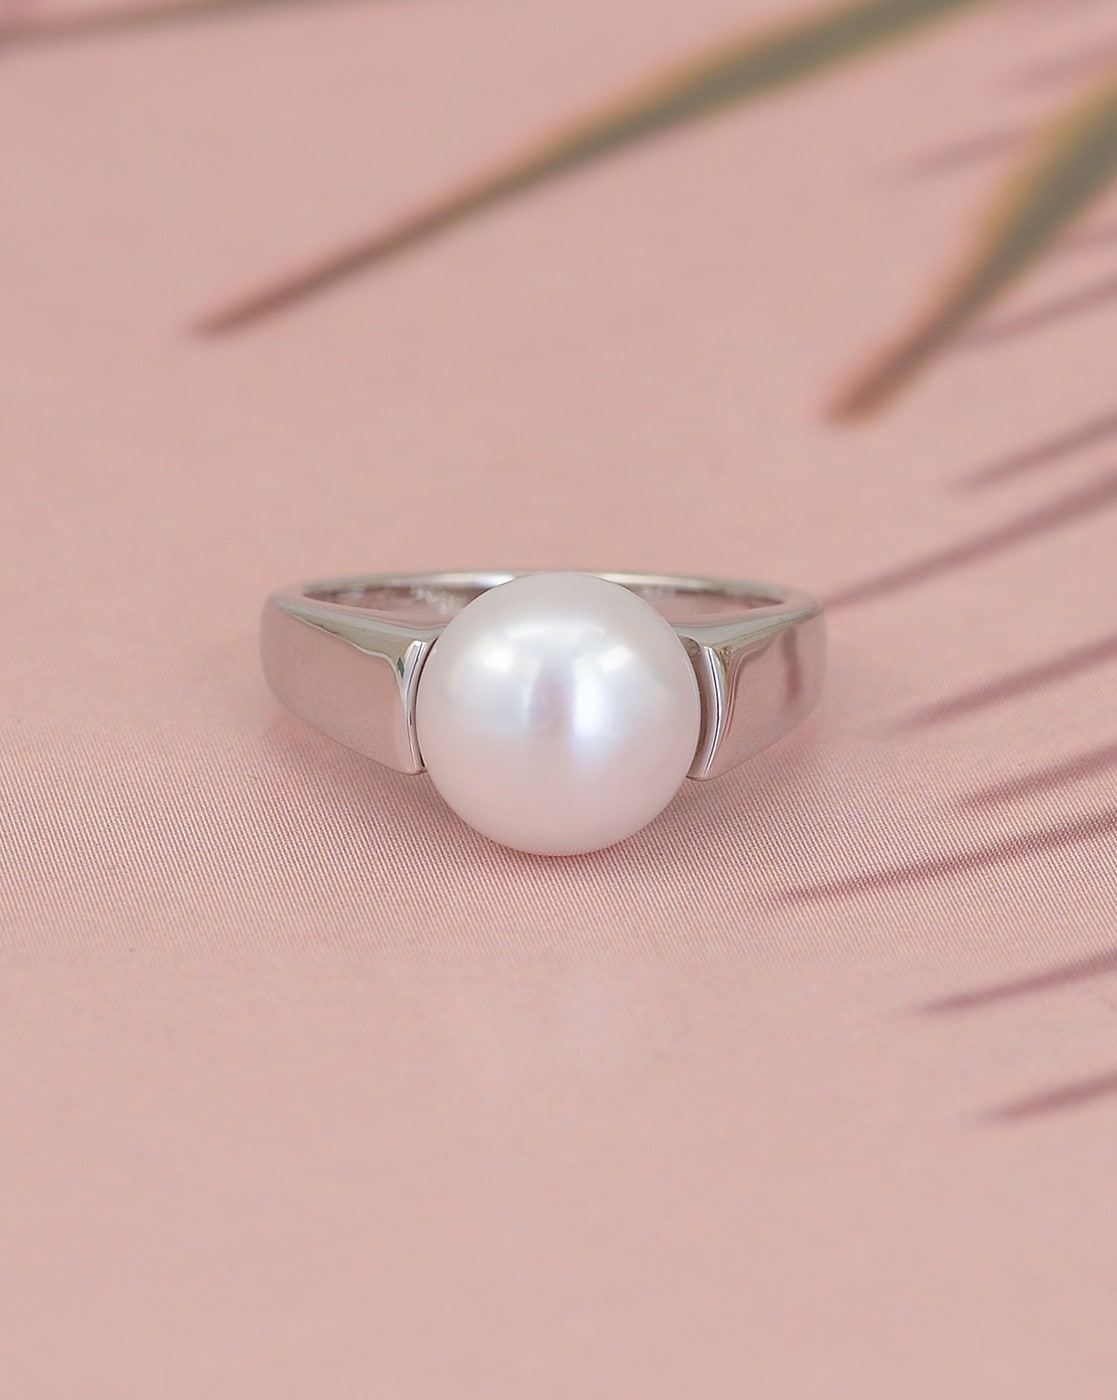 Fashion Wedding Ring Women 925 Silver Jewelry White Pearl Ring Sz 6-10 |  eBay